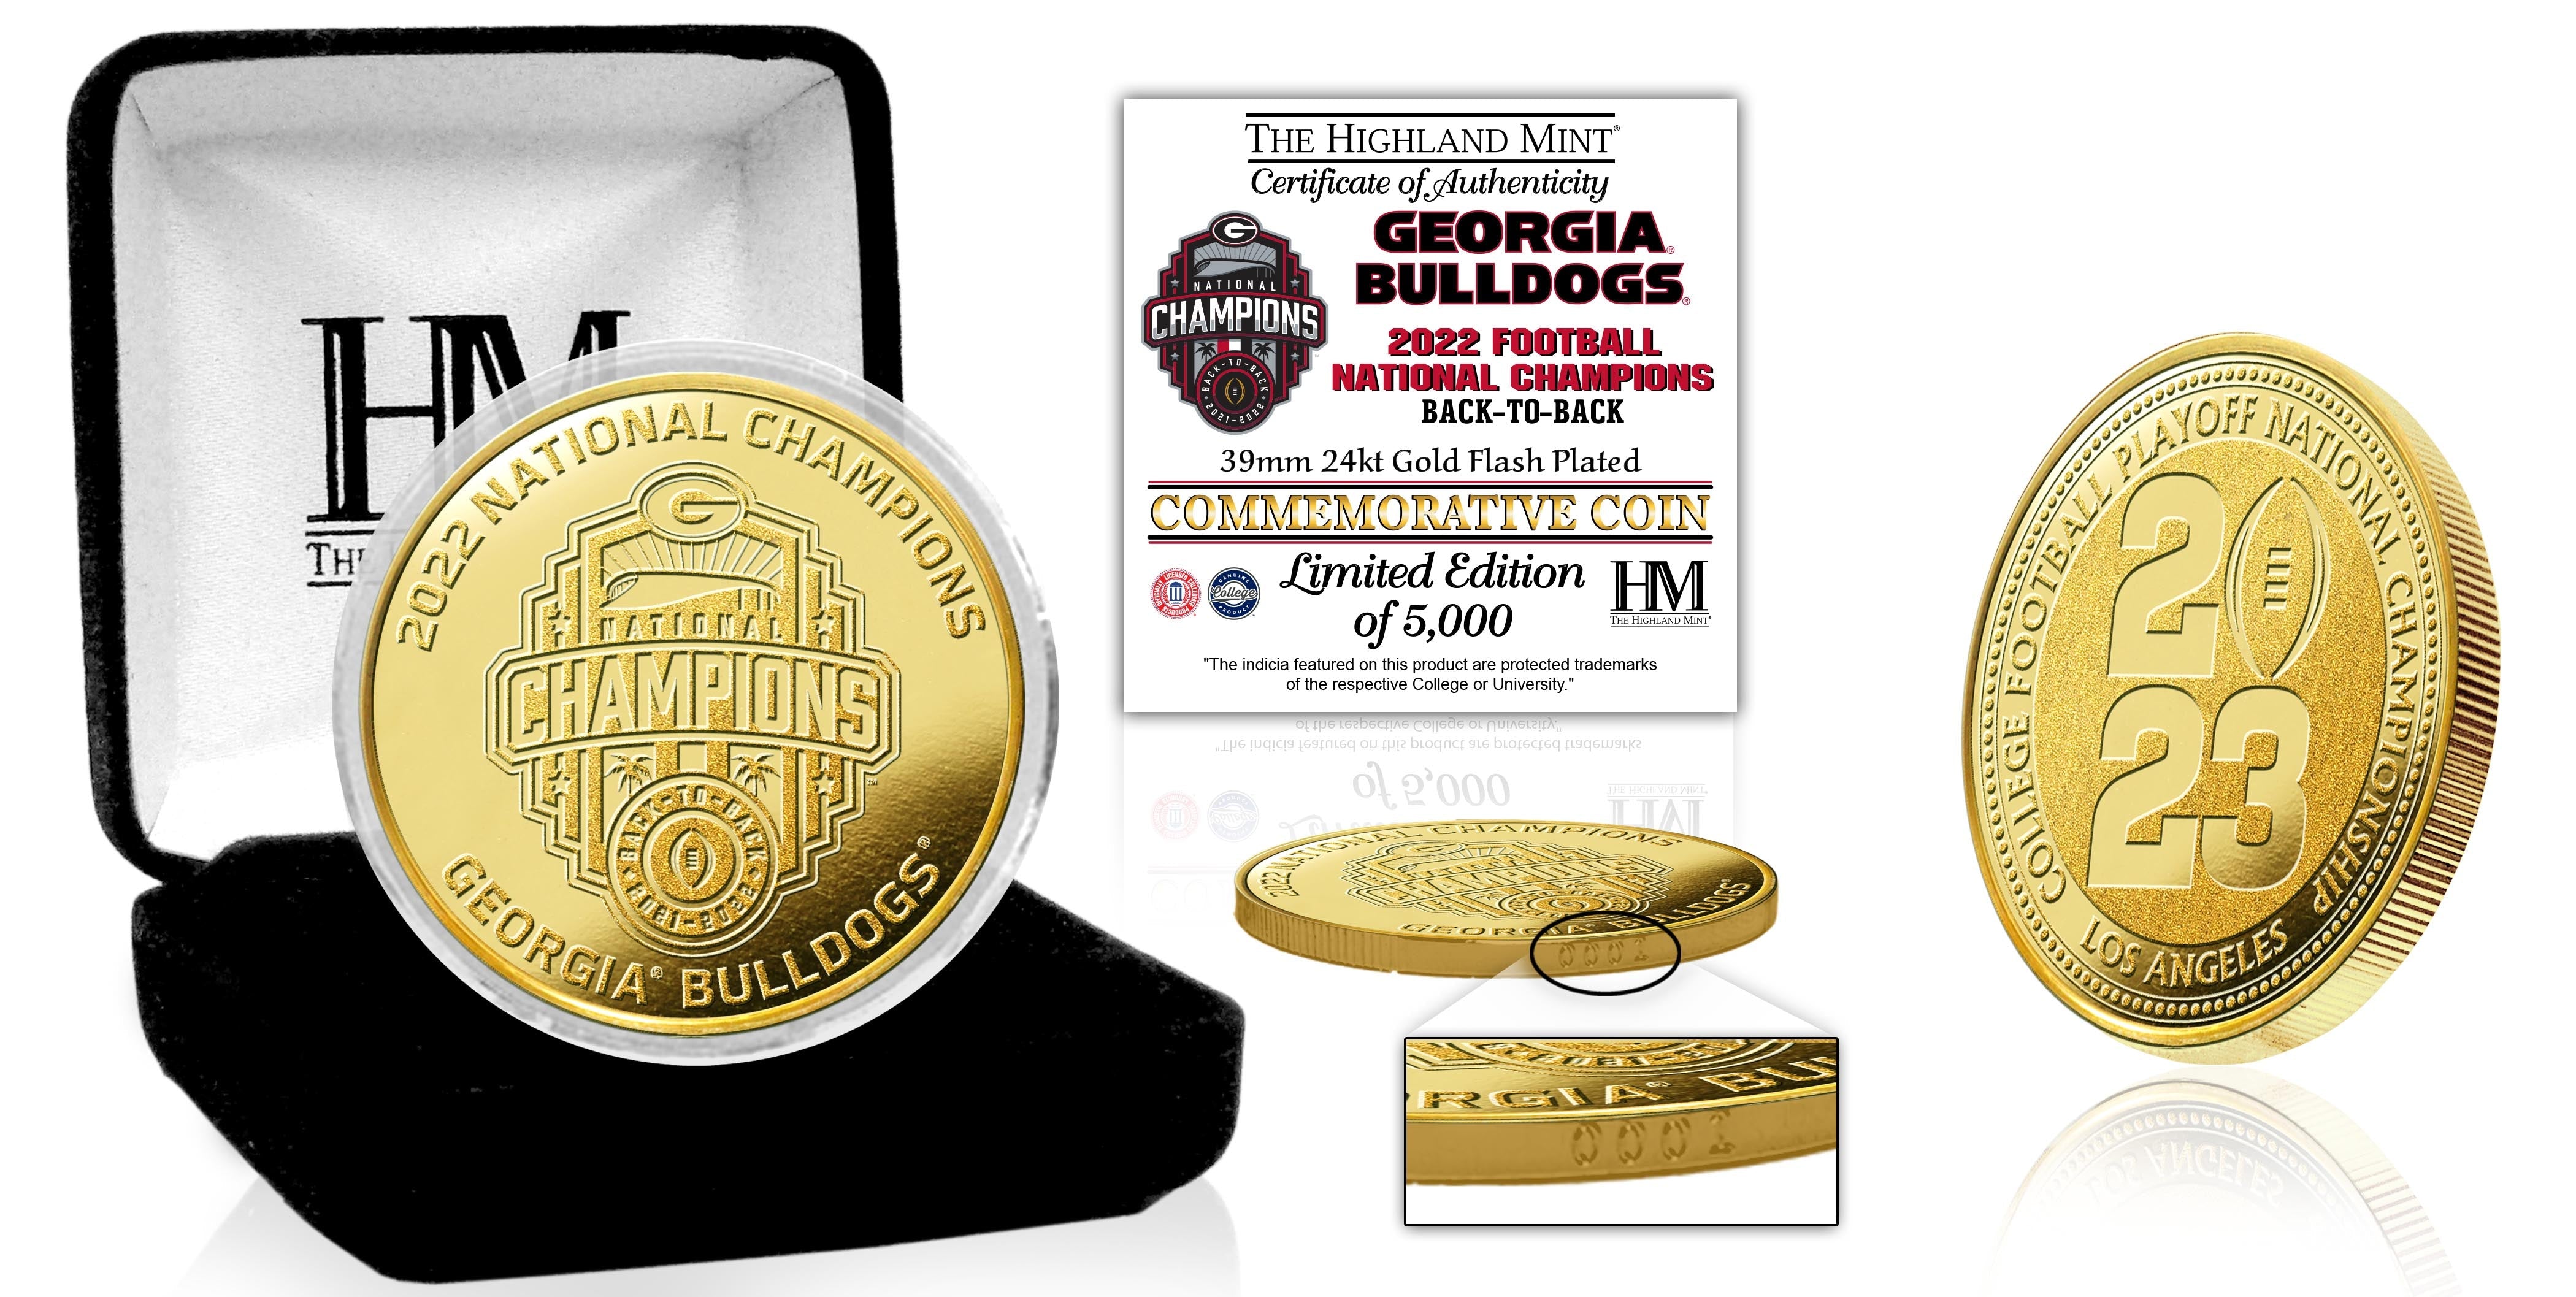 Georgia Bulldogs 2022 National Champions Gold Coin